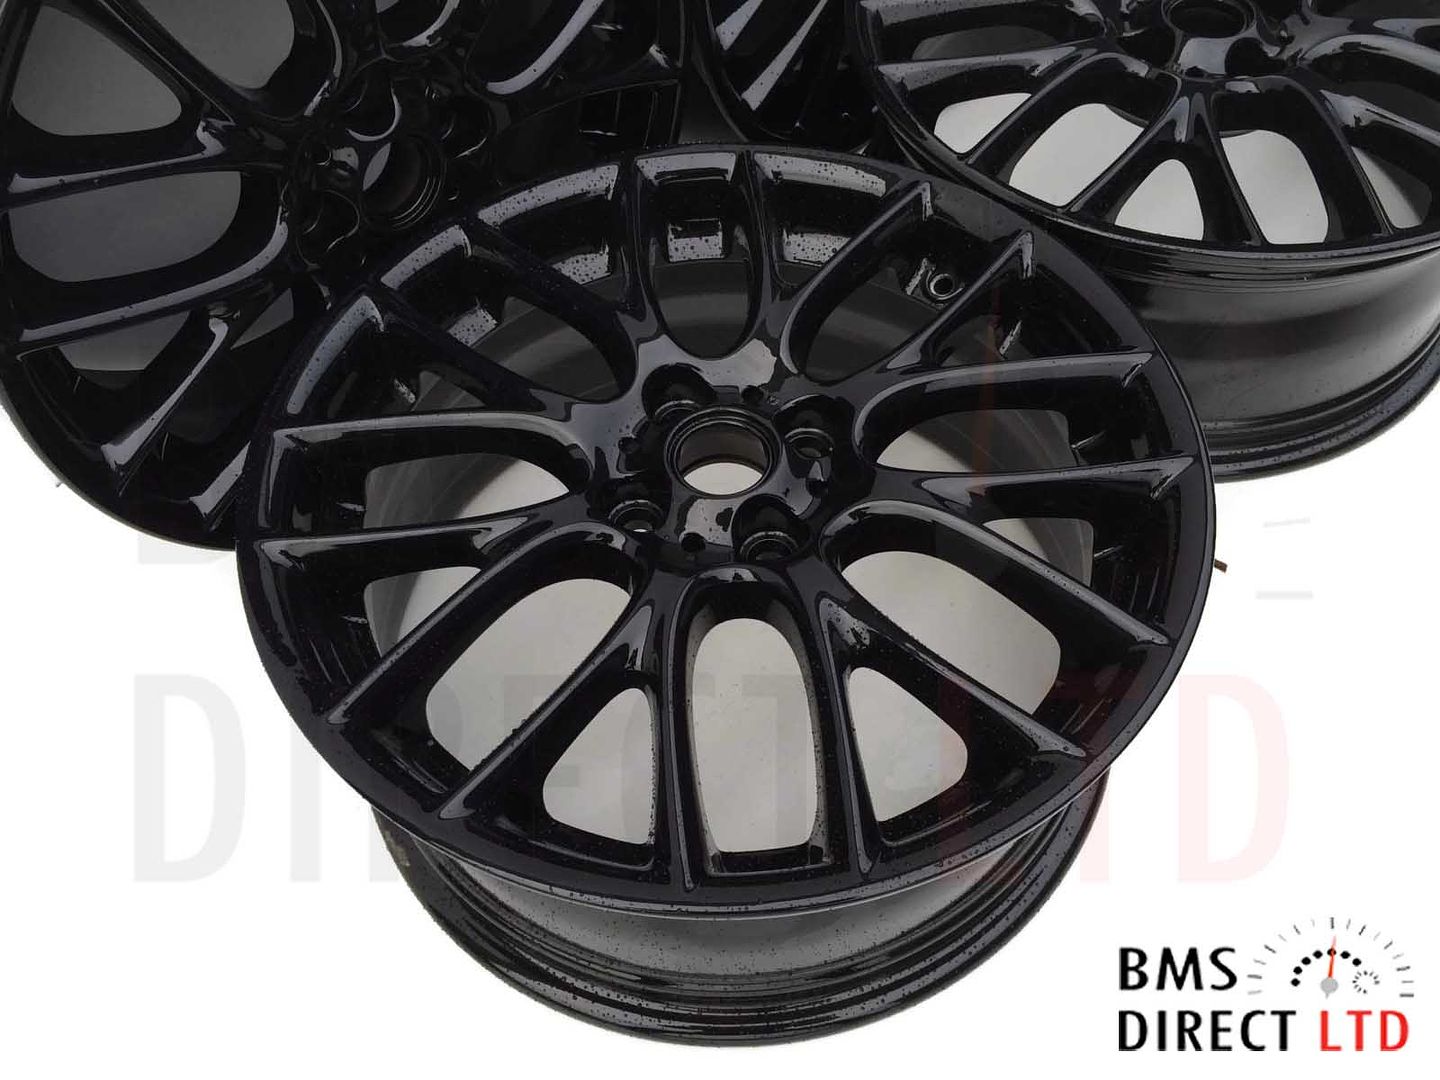 Bmw mini alloy wheels for sale #4